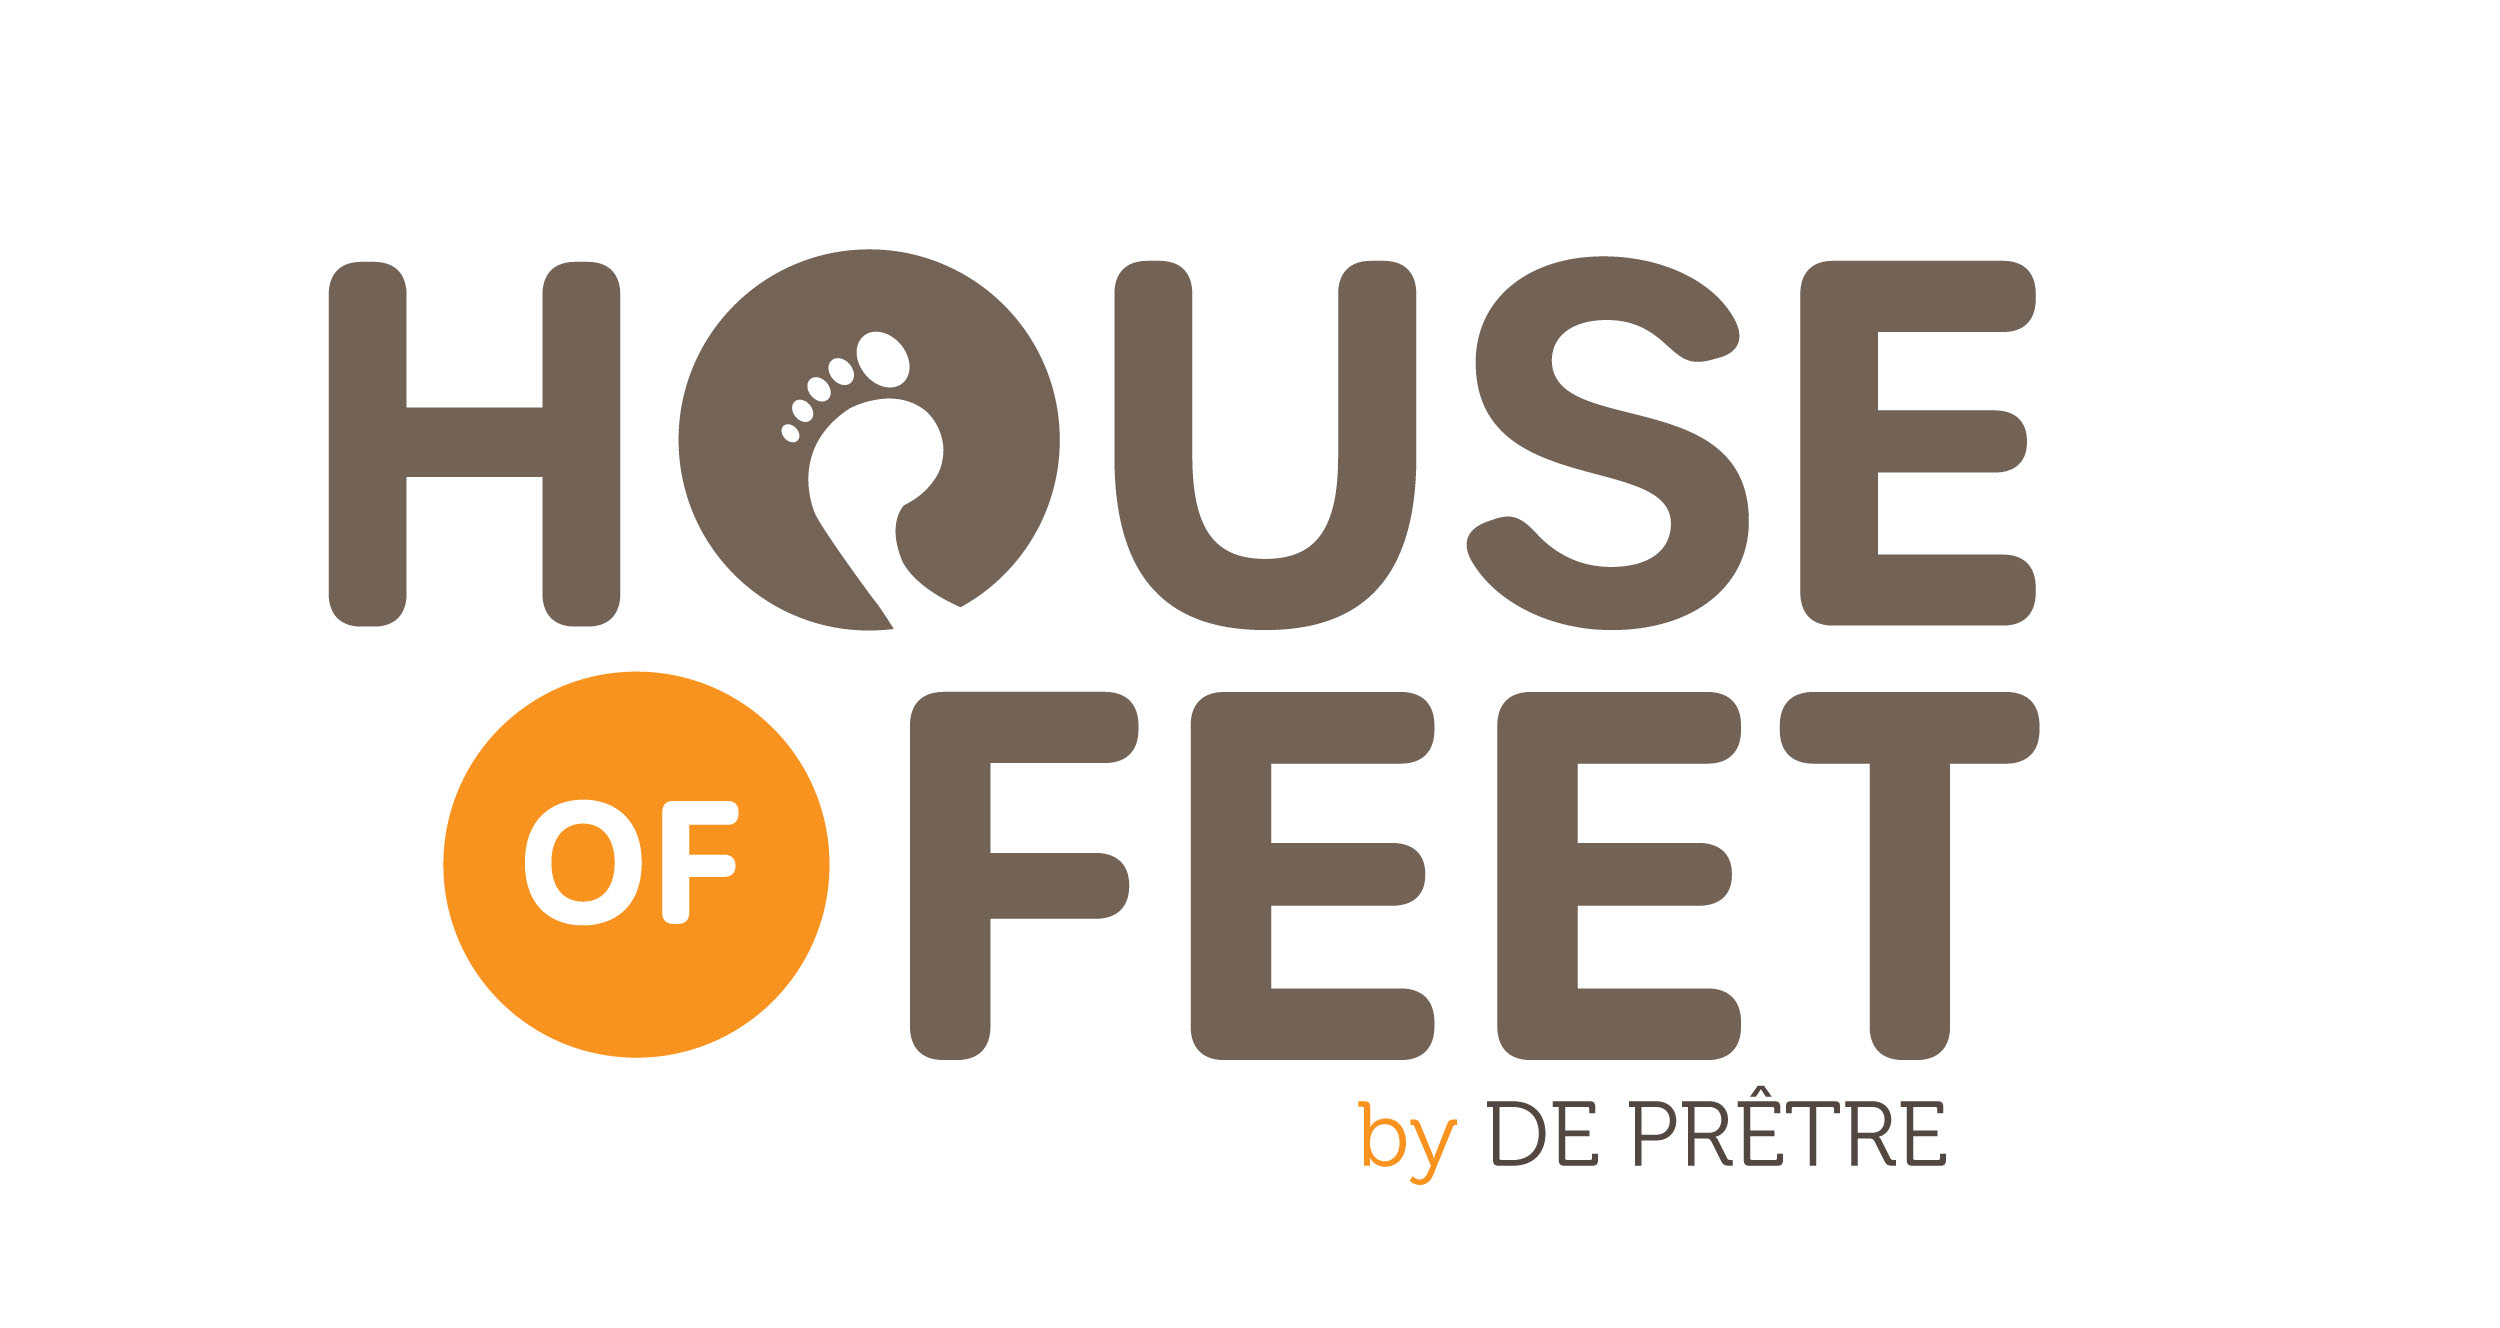 House of feet